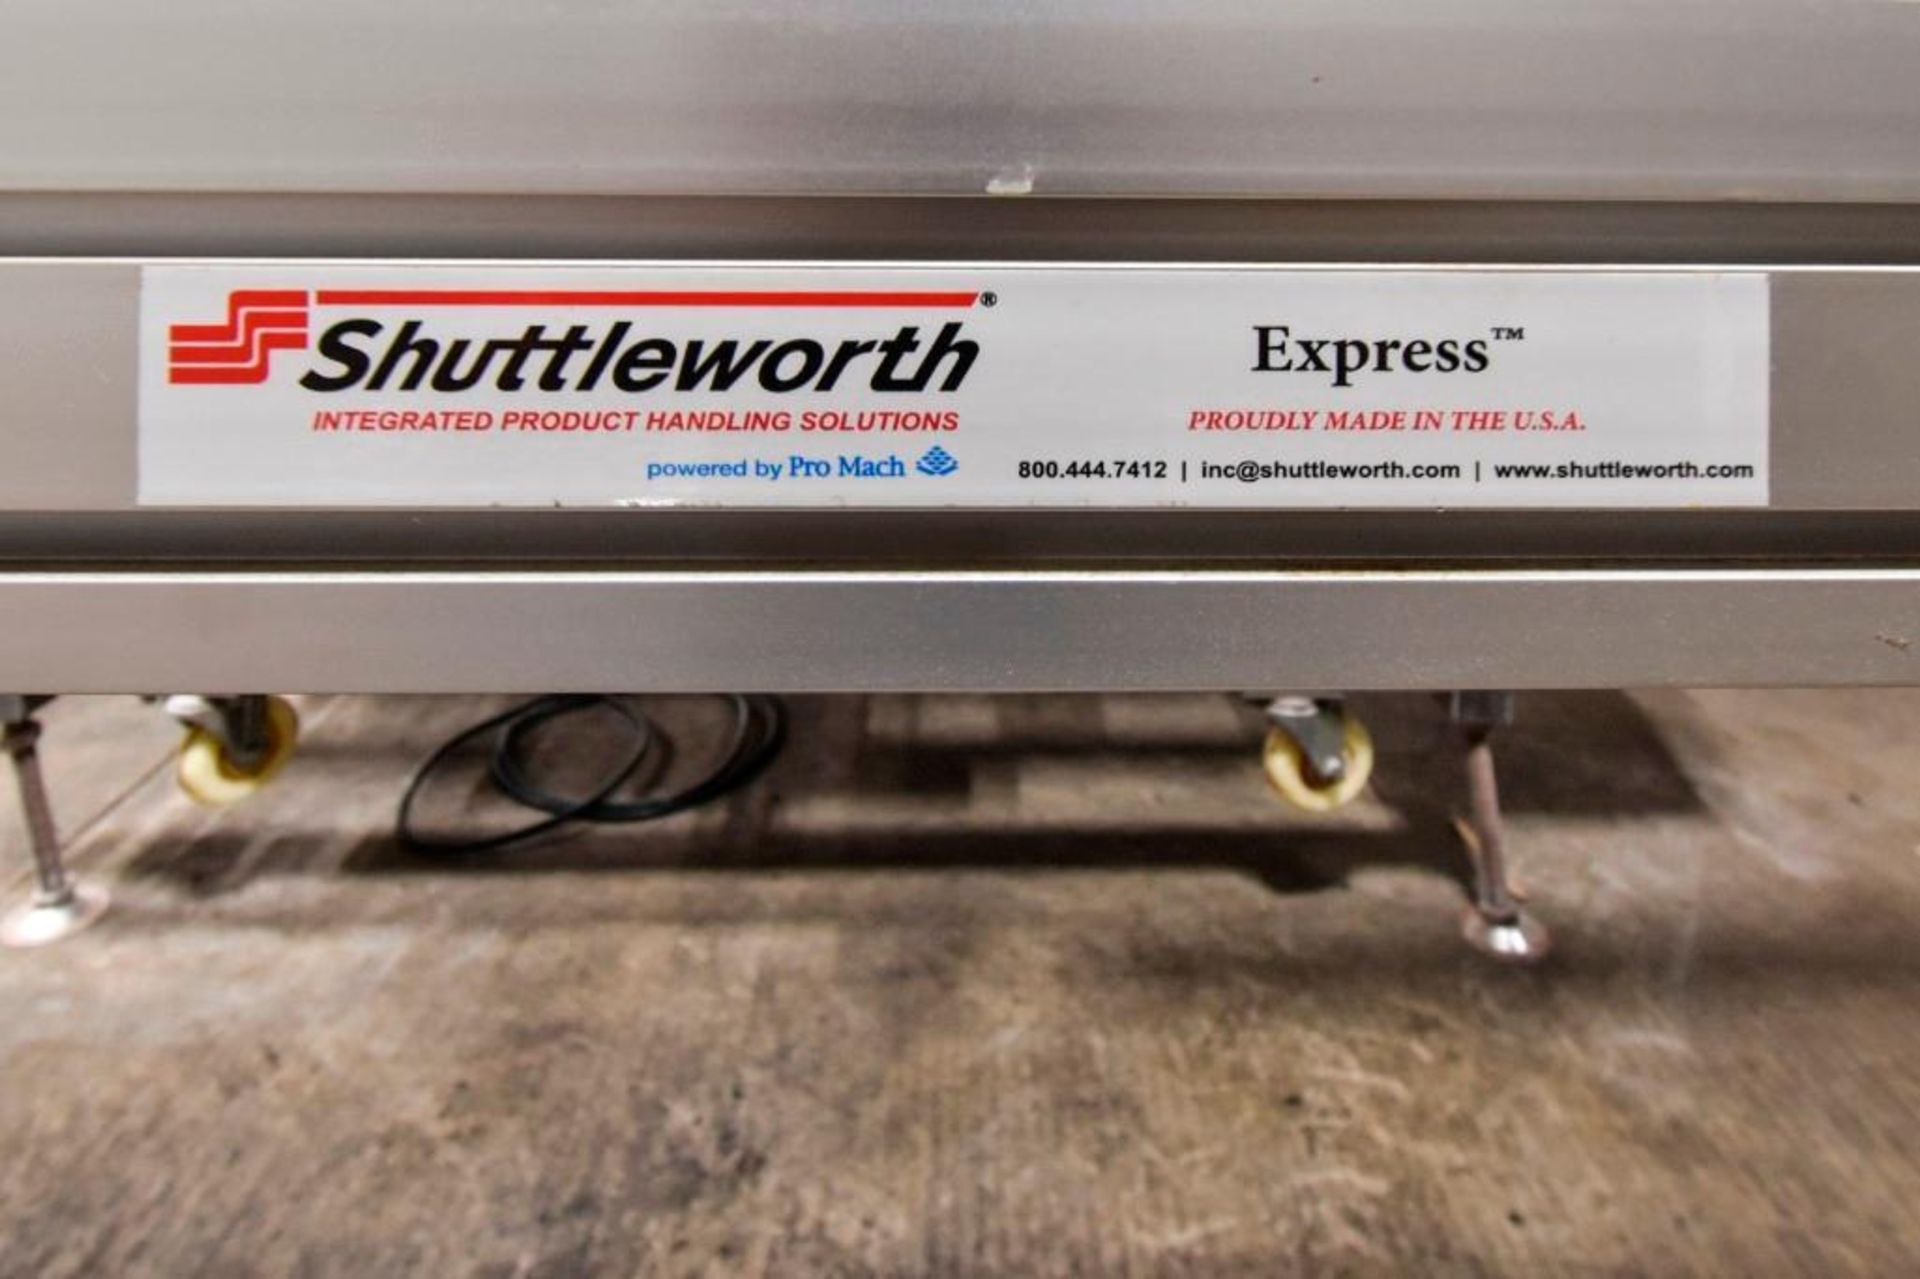 Shuttleworth Variable Speed Conveyor 10 Feet - Image 10 of 11